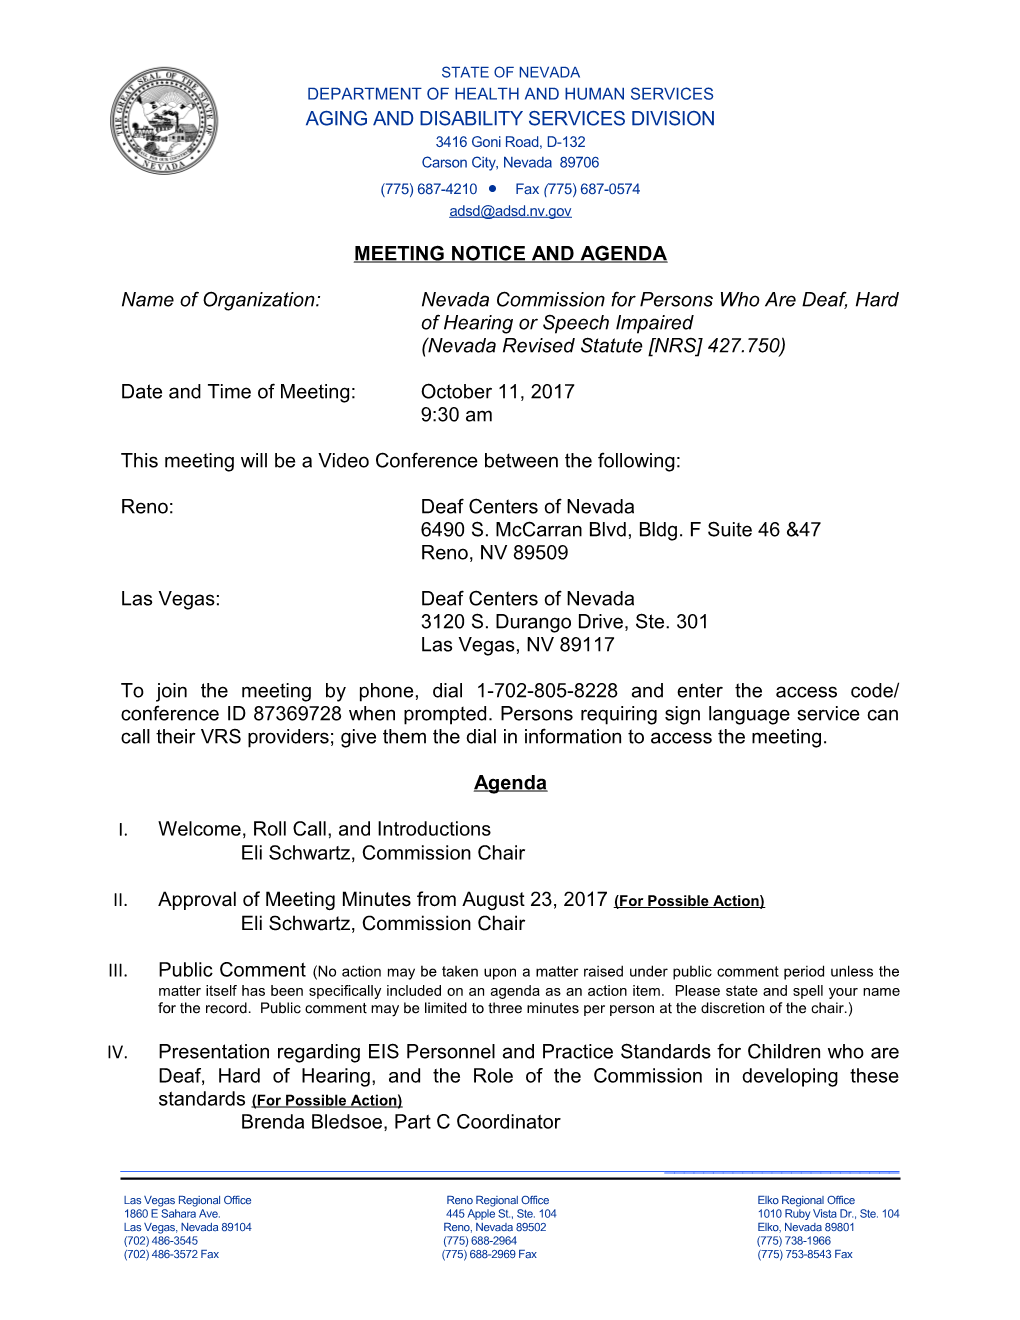 Meeting Notice and Agenda s8